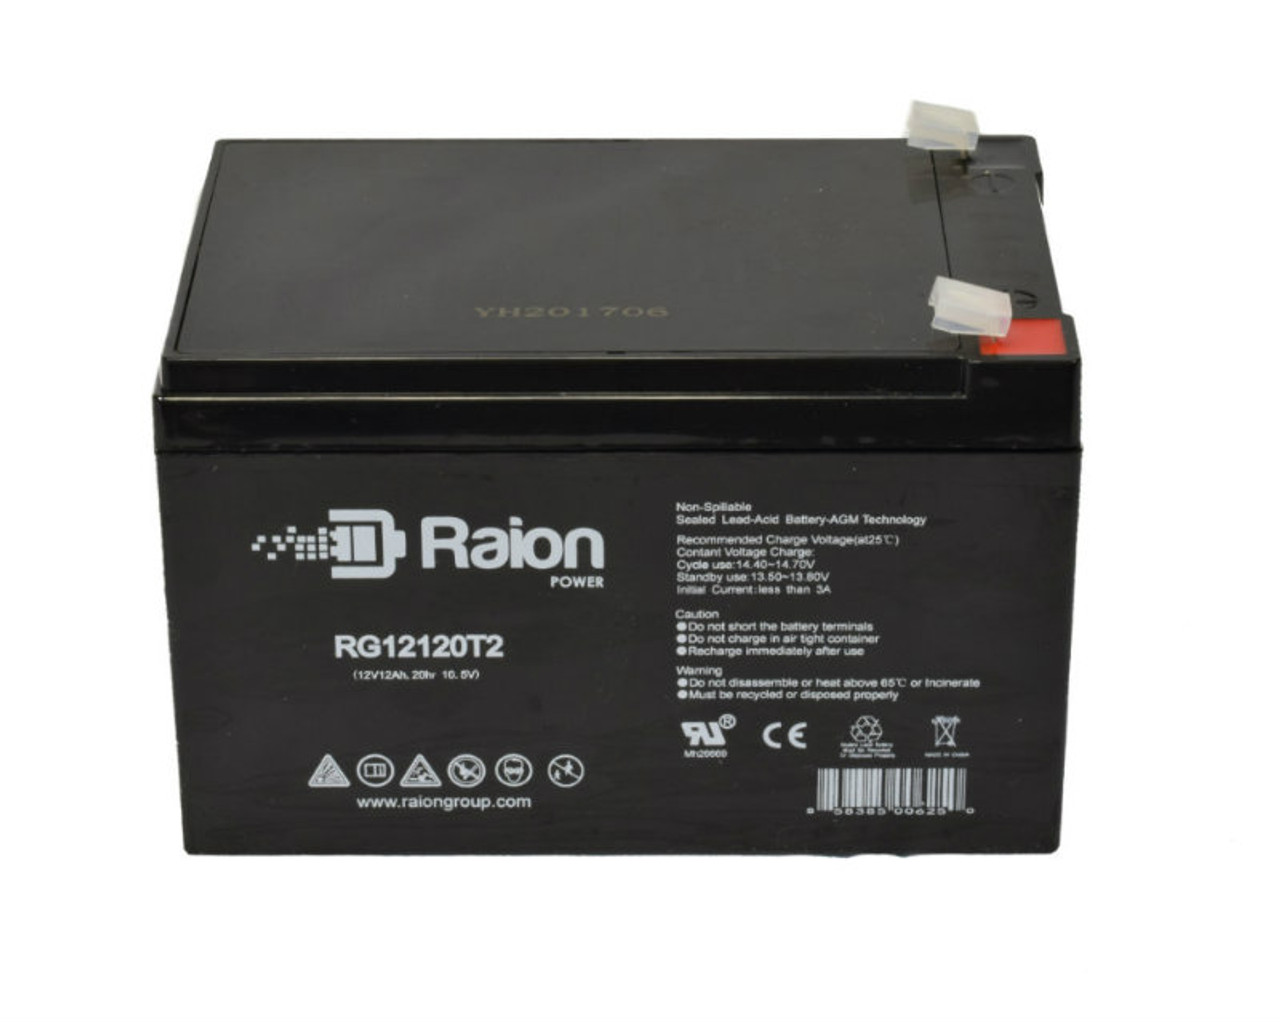 Raion Power RG12120T2 SLA Battery for Park Medical Electronics Lab 806CA Doppler